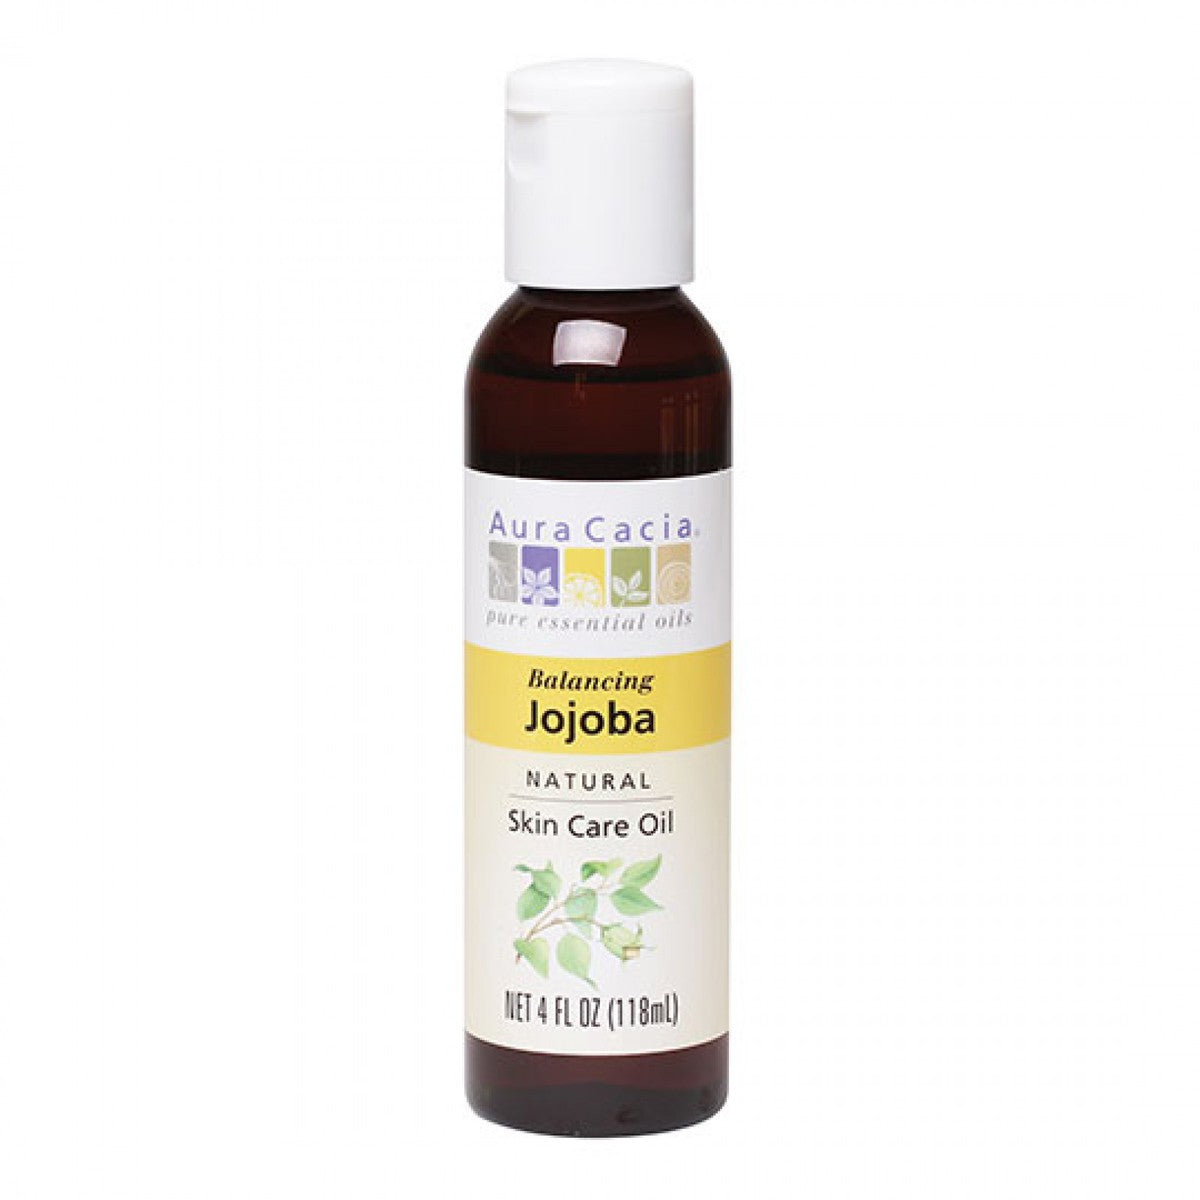 Primary image of Jojoba Oil